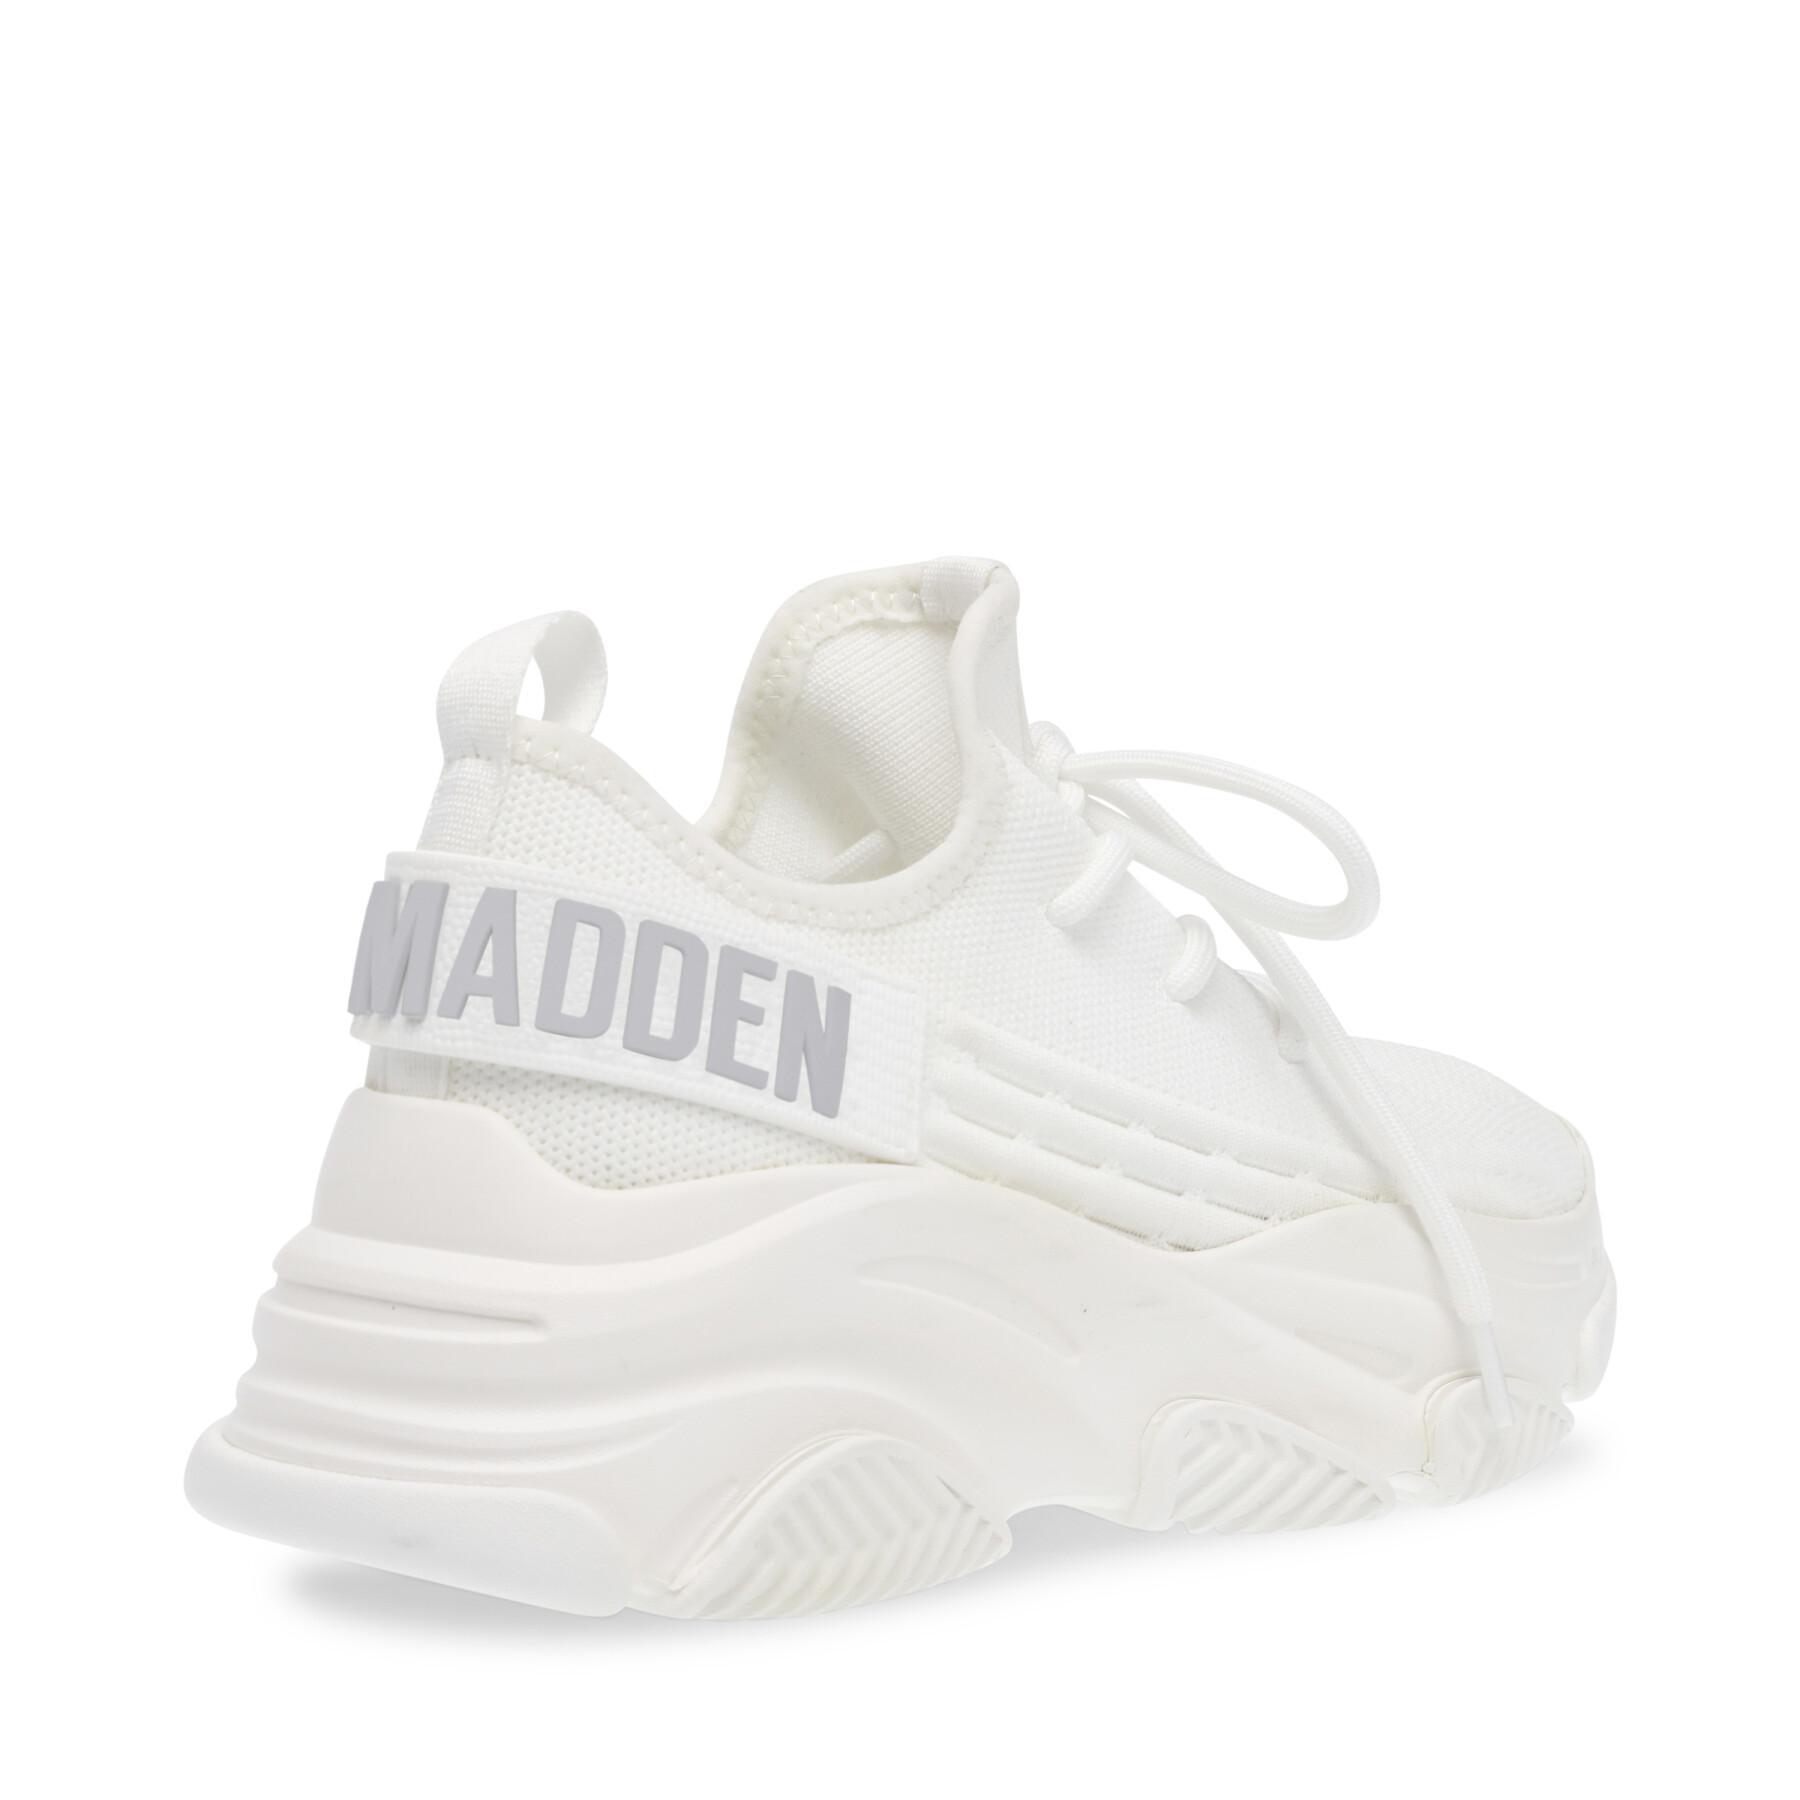 Protected sneakers for women Steve Madden